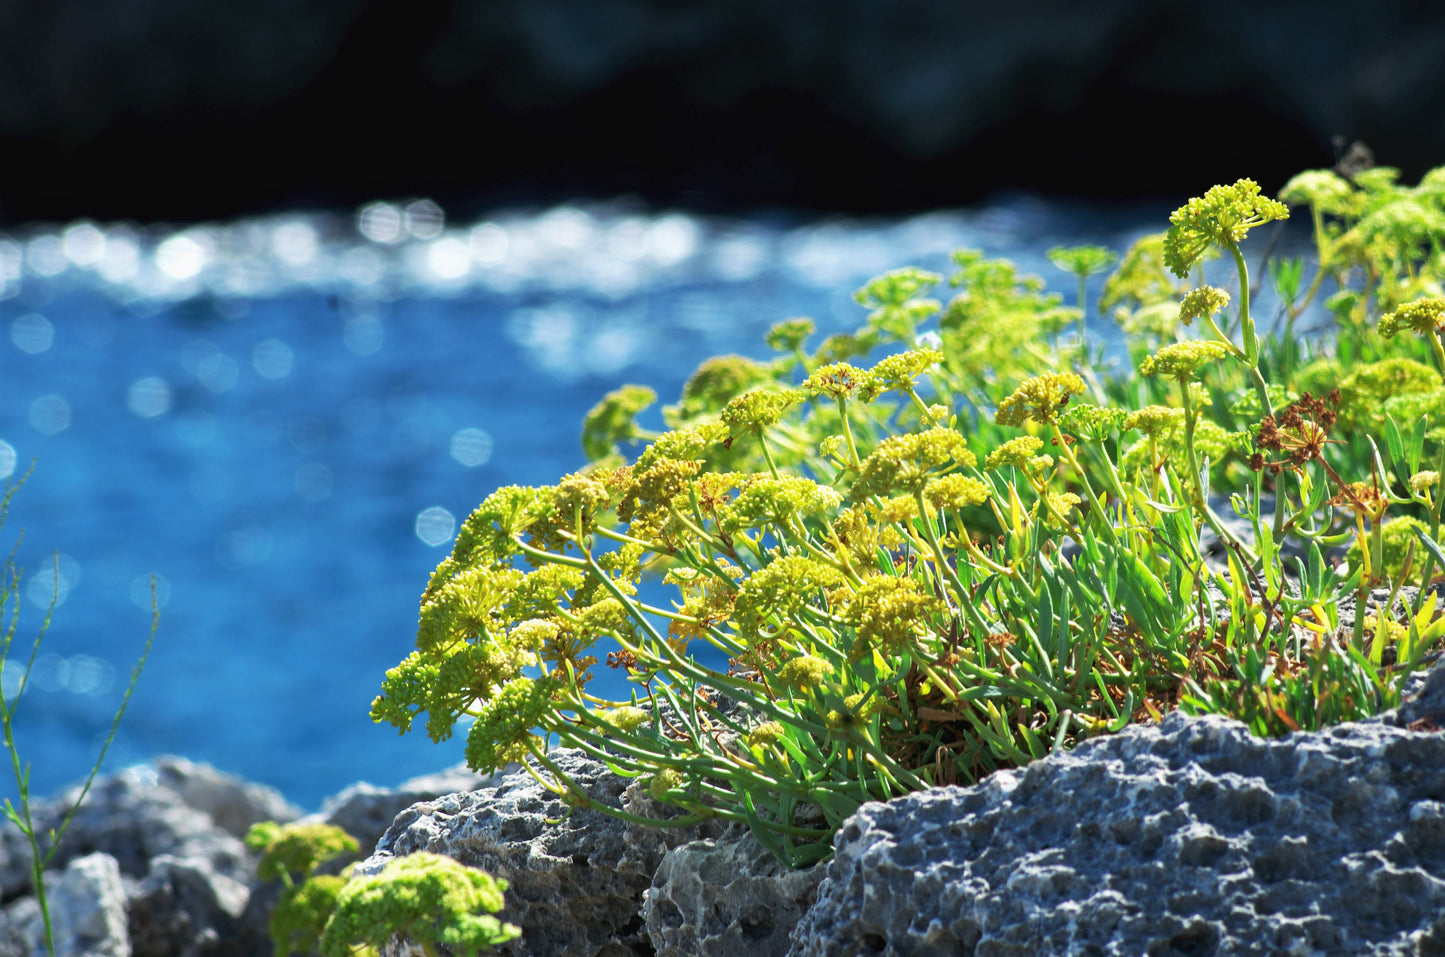 40 SEA FENNEL Rock Samphire Crithmum Maritimum Fragrant Herb Edible Vegetable Yellow Flower Seeds